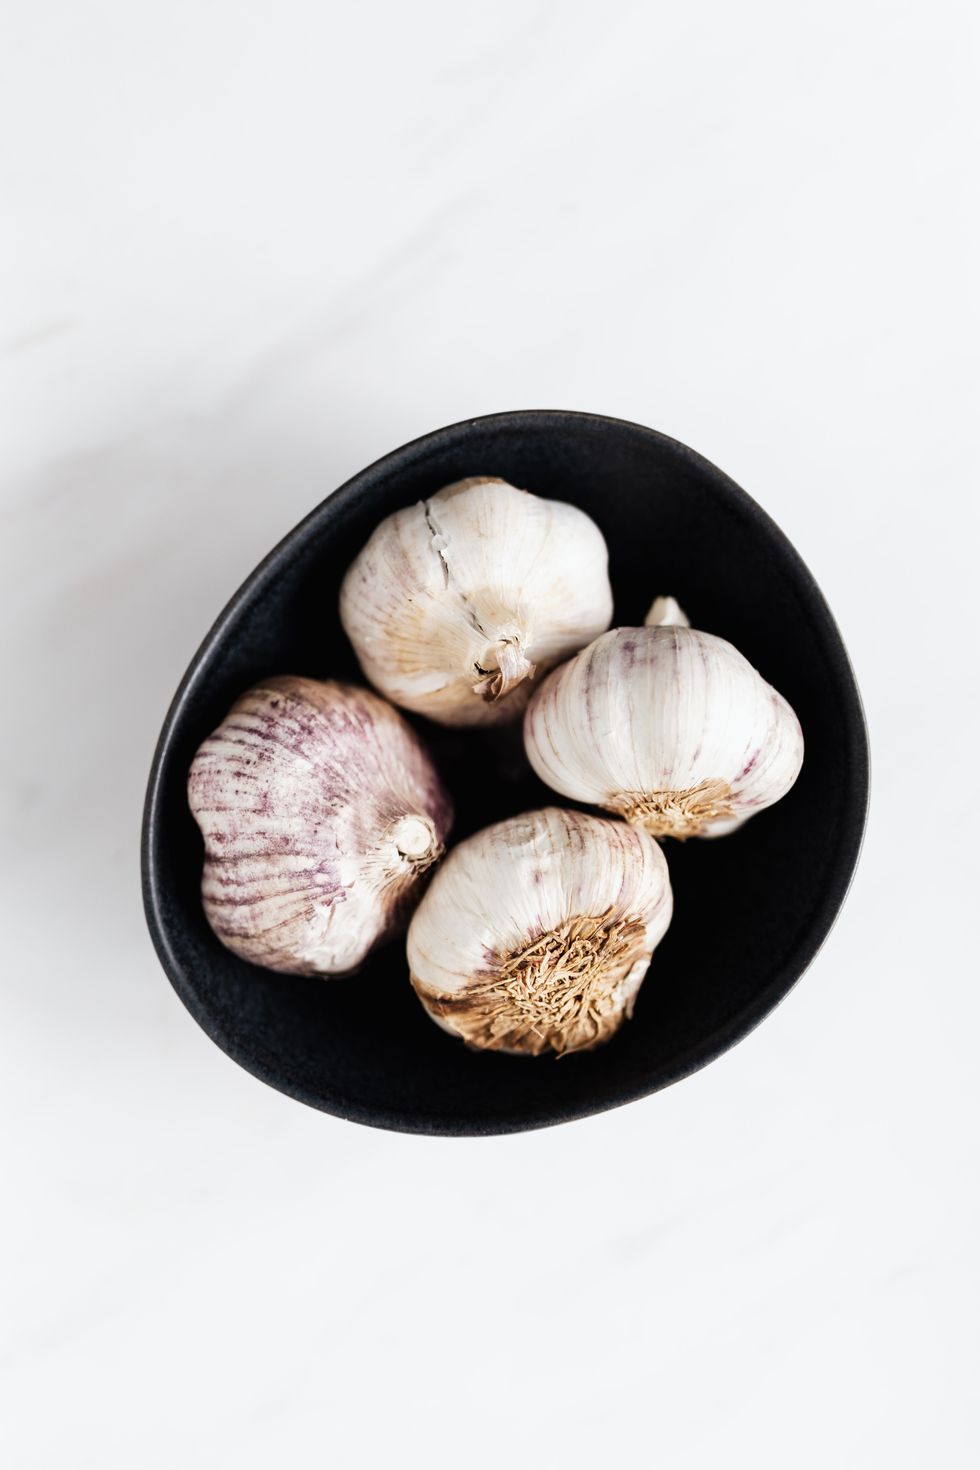 garlic heads in black bowl